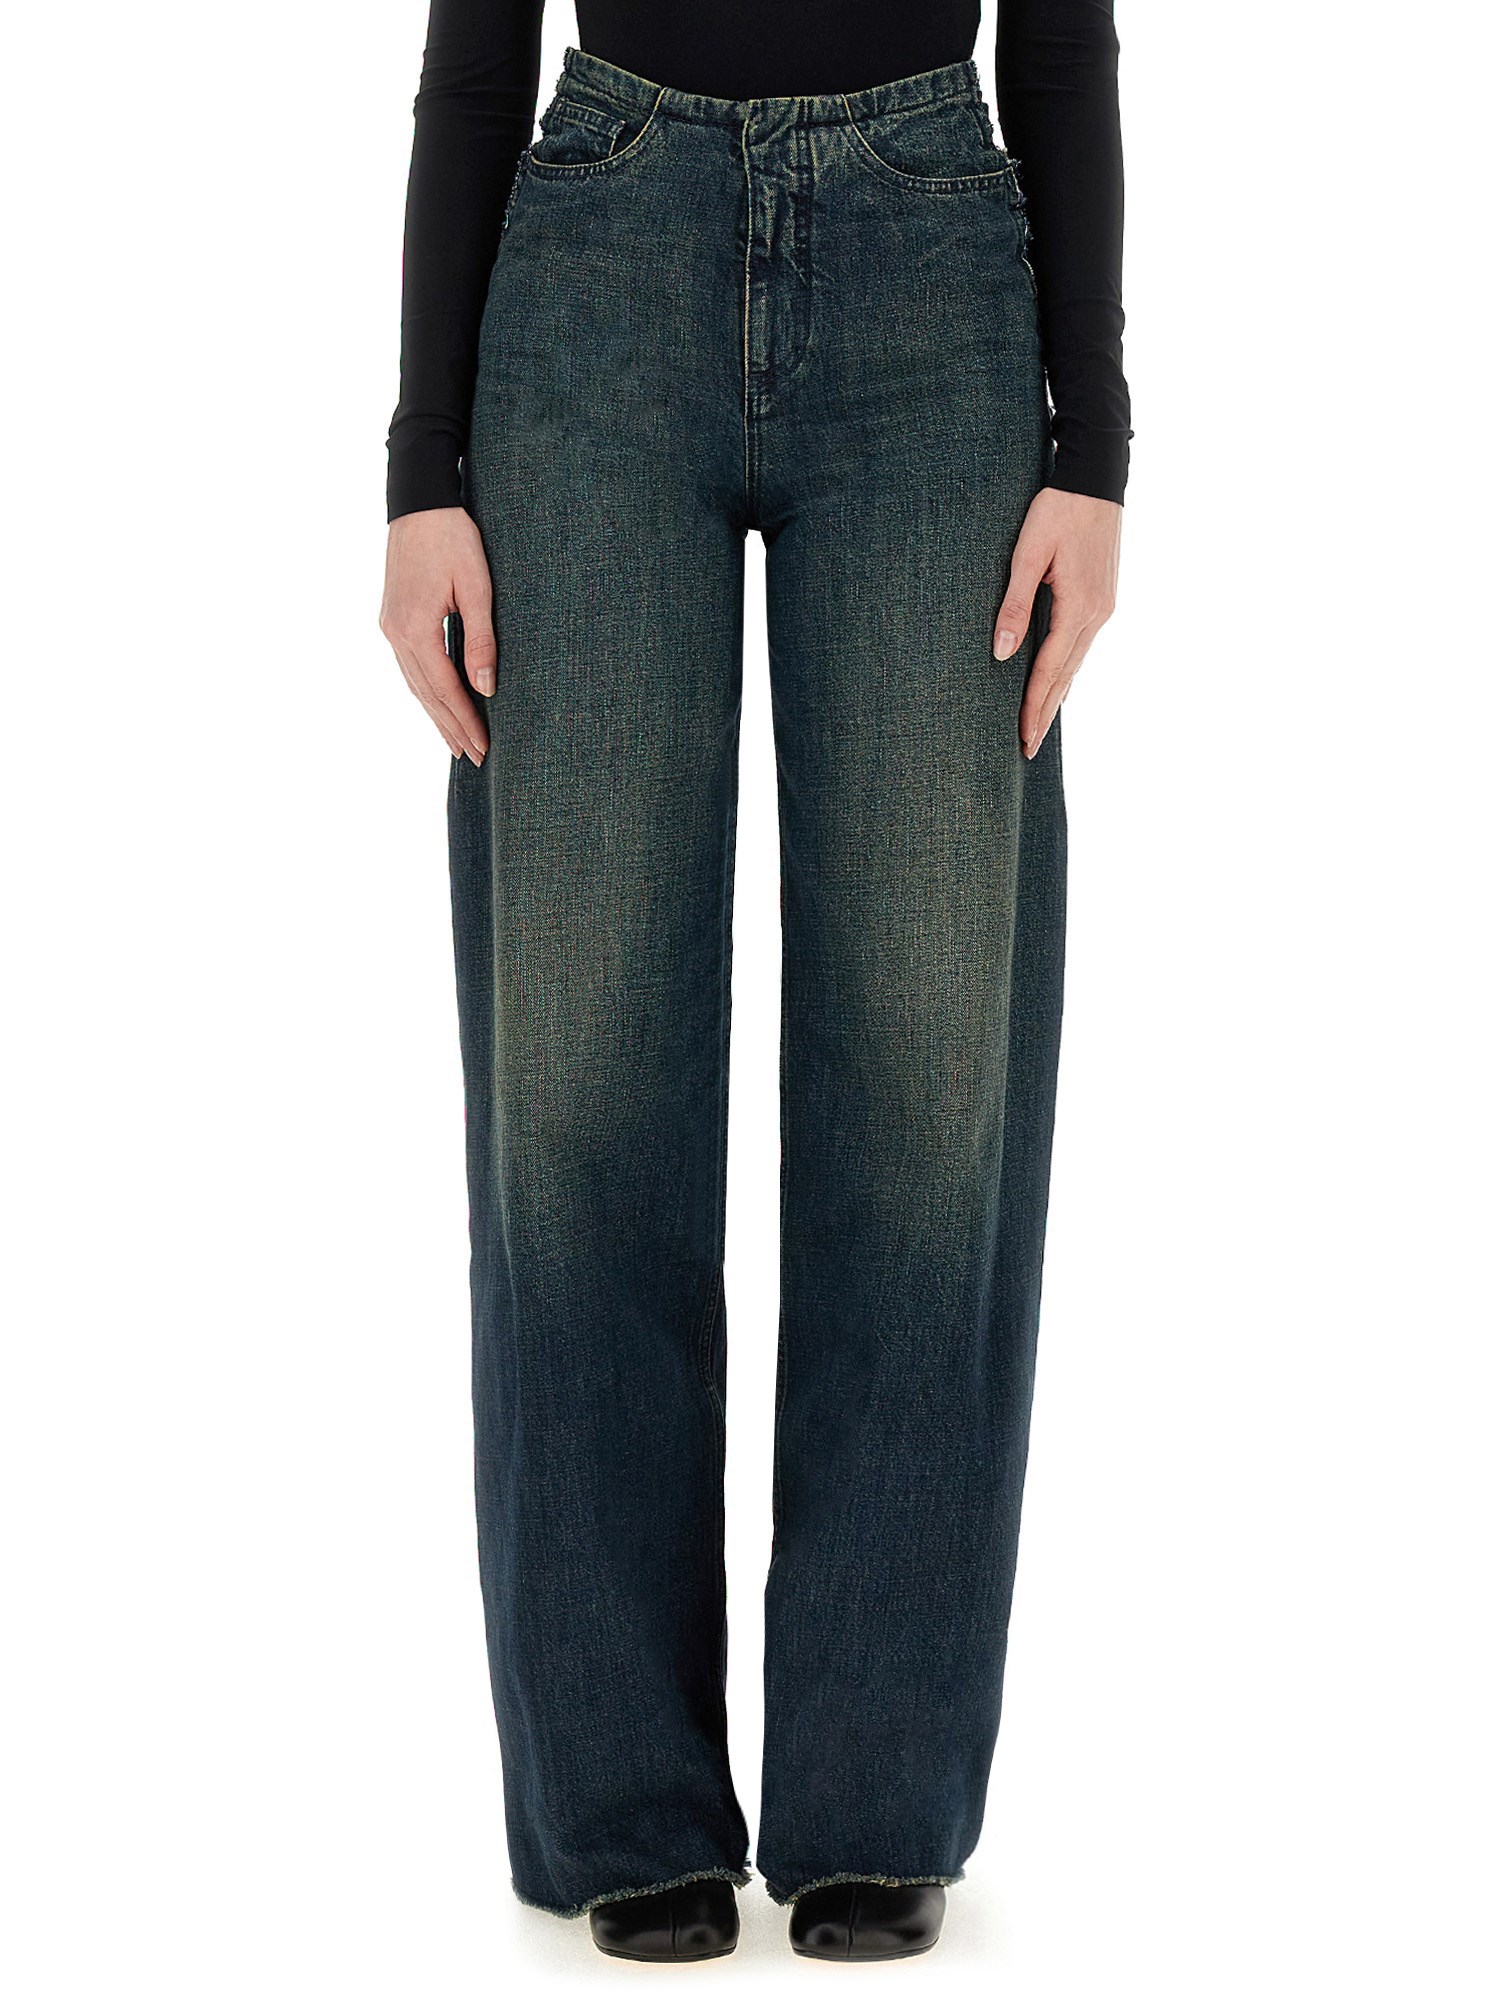 mm6 maison margiela jeans 5 pockets